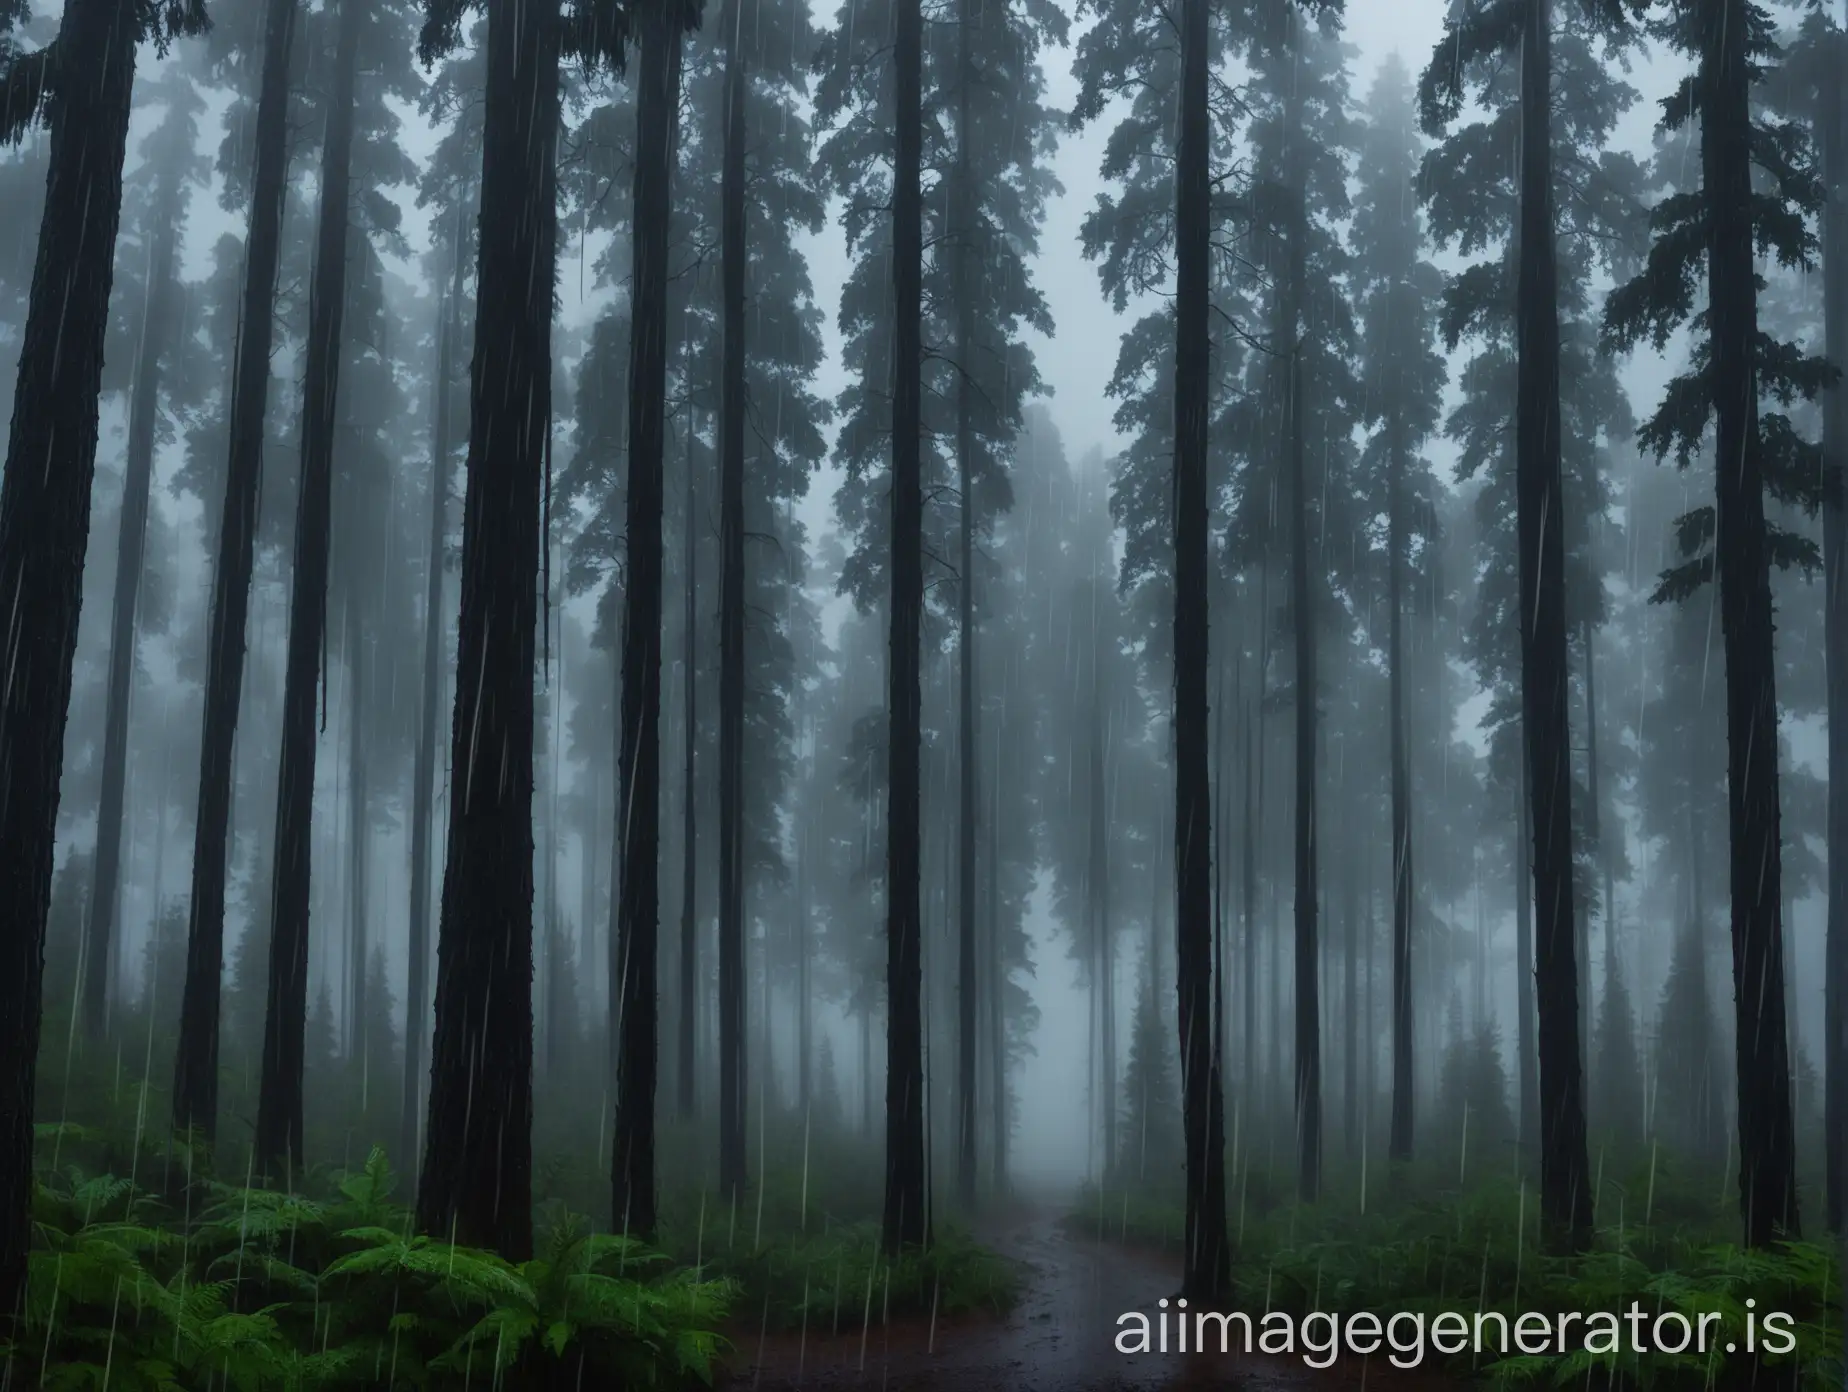 Mystical-Rainforest-Foggy-Ambiance-with-Tall-Dark-Trees